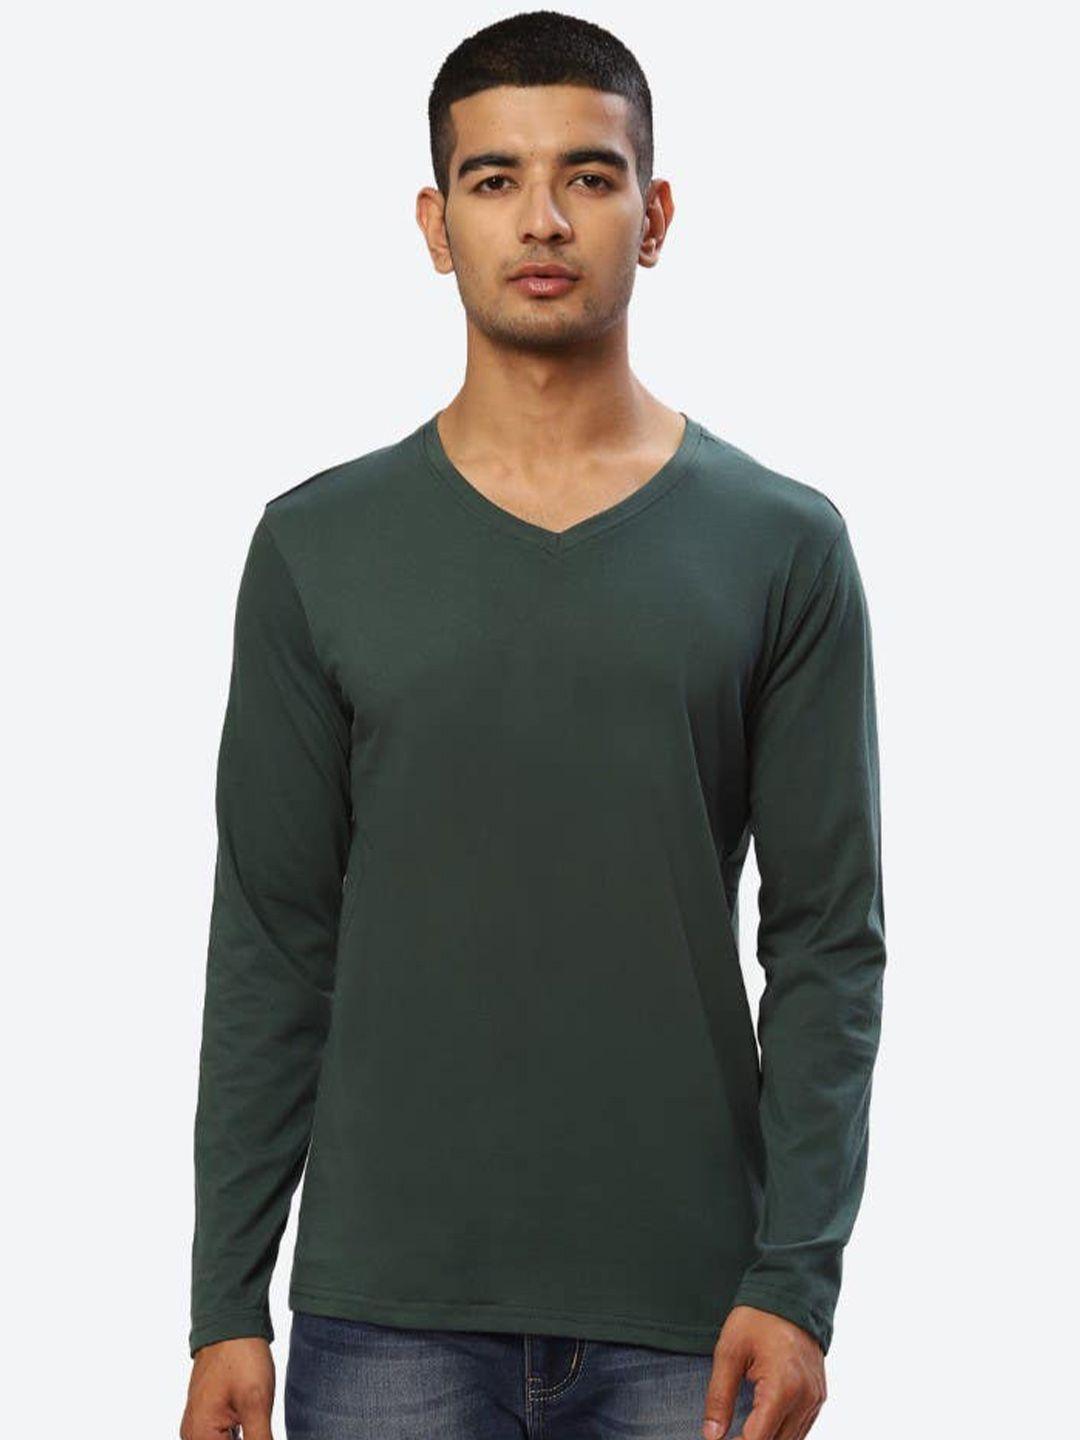 2bme v-neck long sleeves cotton t-shirt